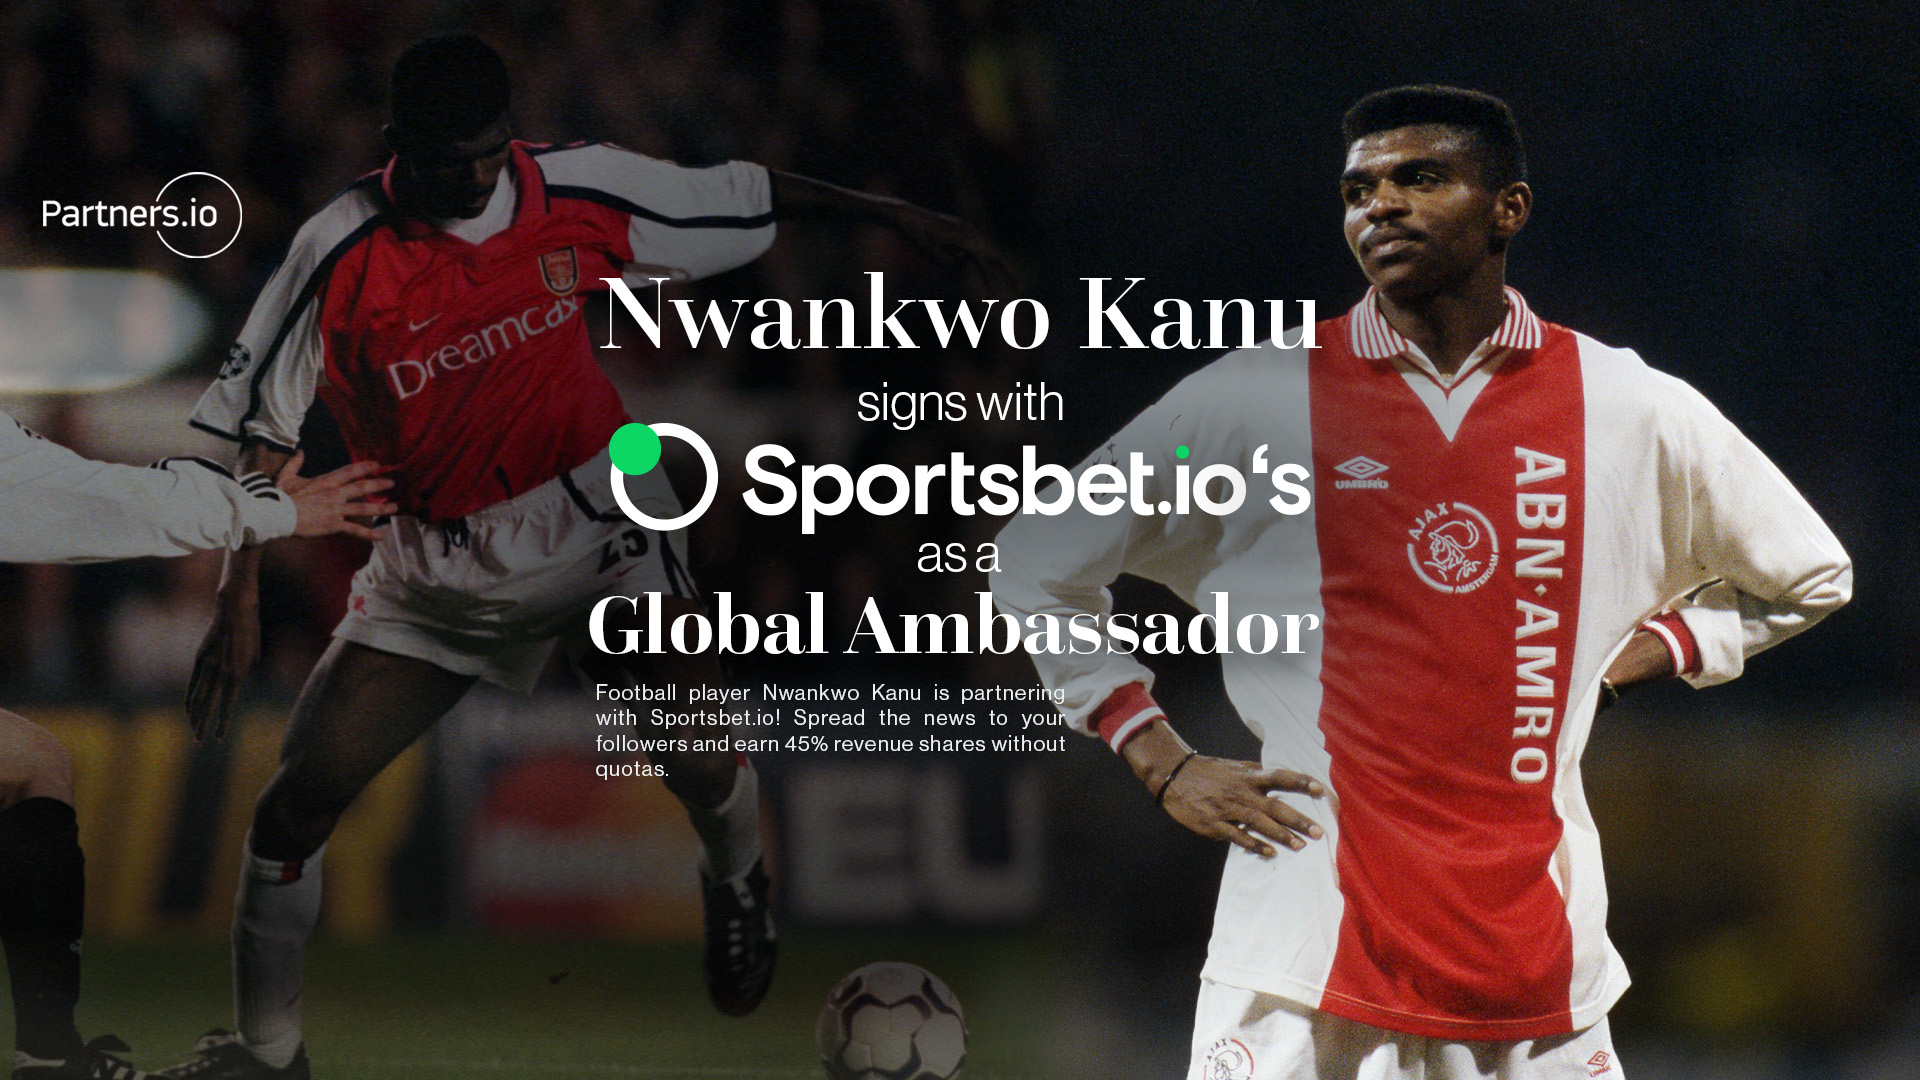 Nwankwo Kanu signs with Sportsbet.io as a global ambassador